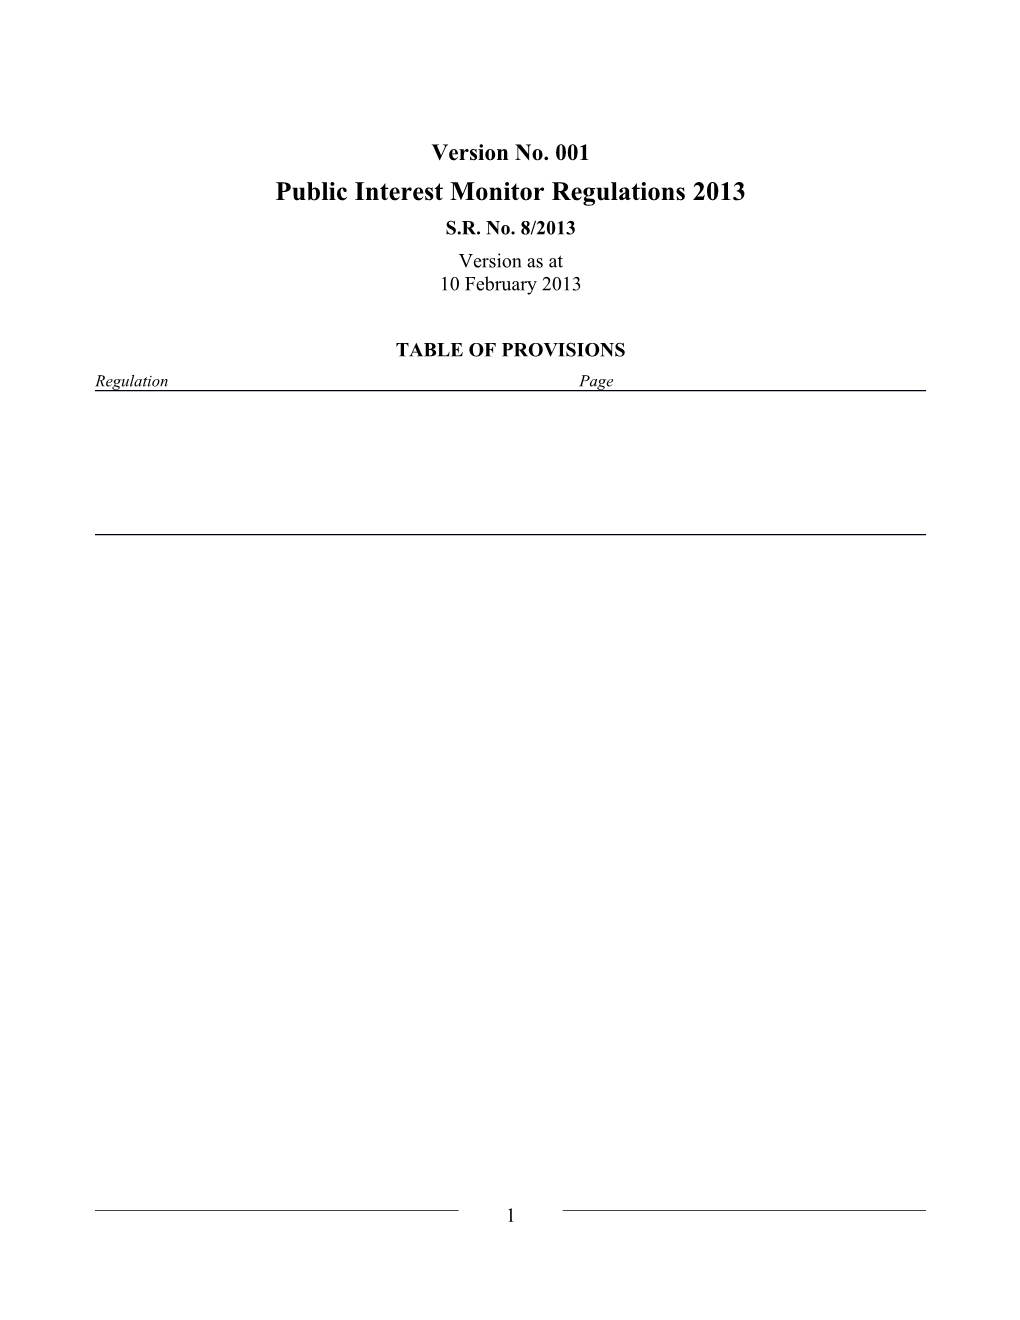 Public Interest Monitor Regulations 2013